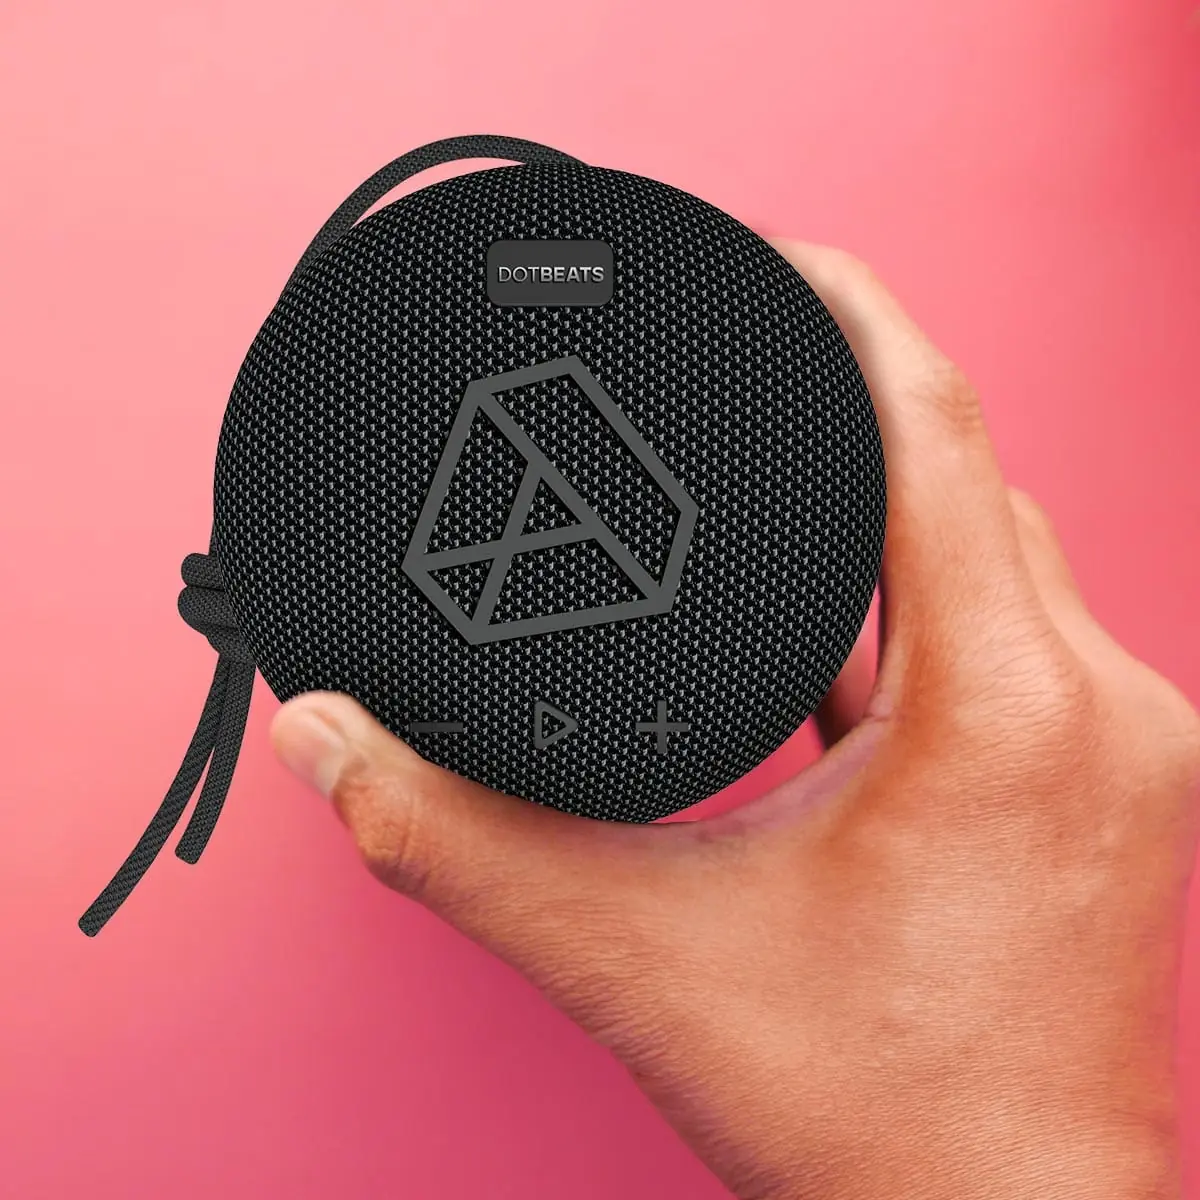 DOTBEATS Mini Wireless Bluetooth Speaker, Black, held within the grasp of a hand.